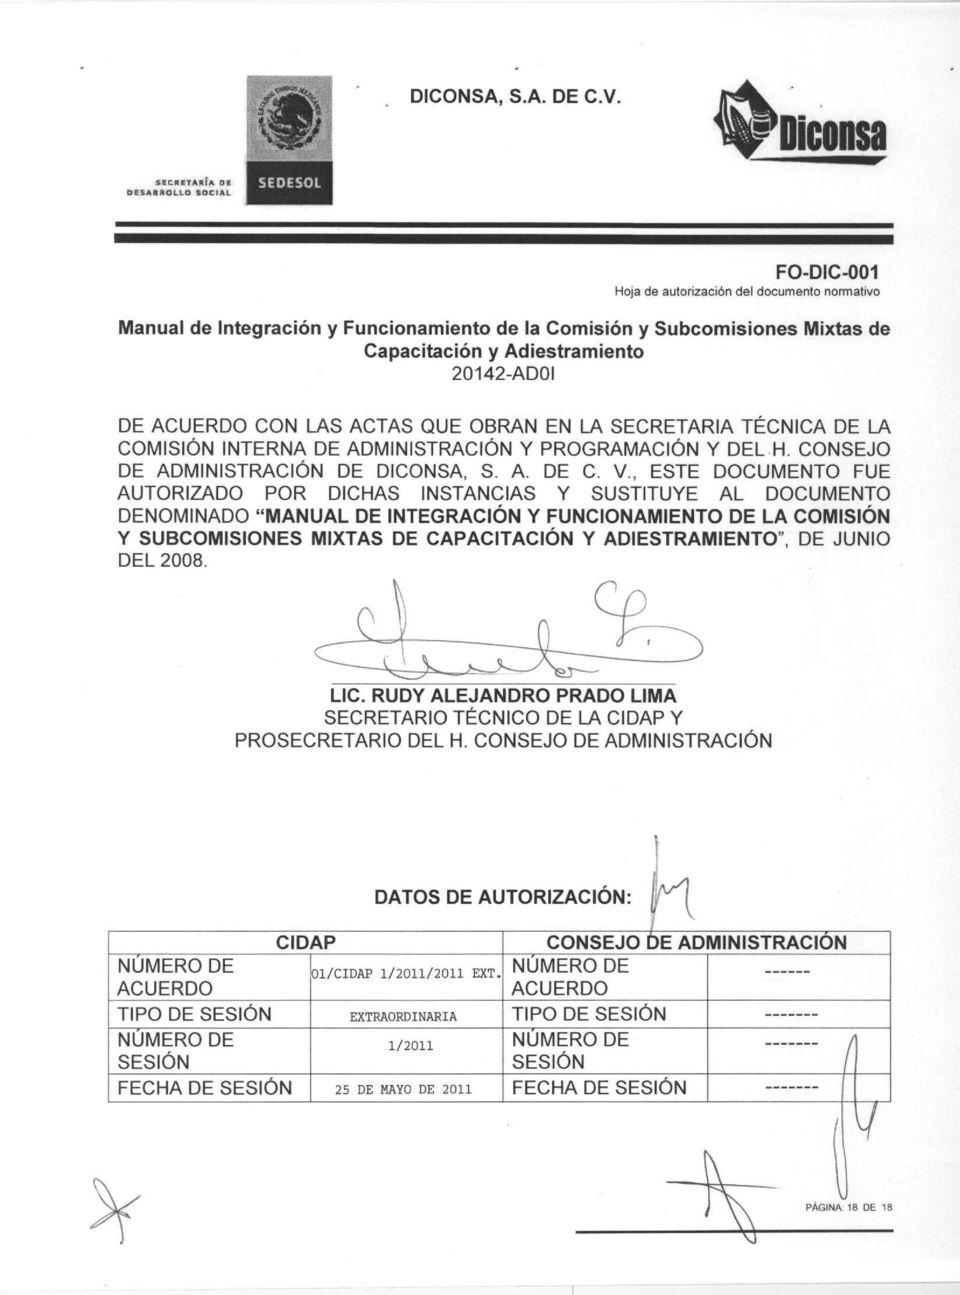 CONSEJO DE ADMINISTRACIÓN DE DICONSA, S. A. DE C. V.